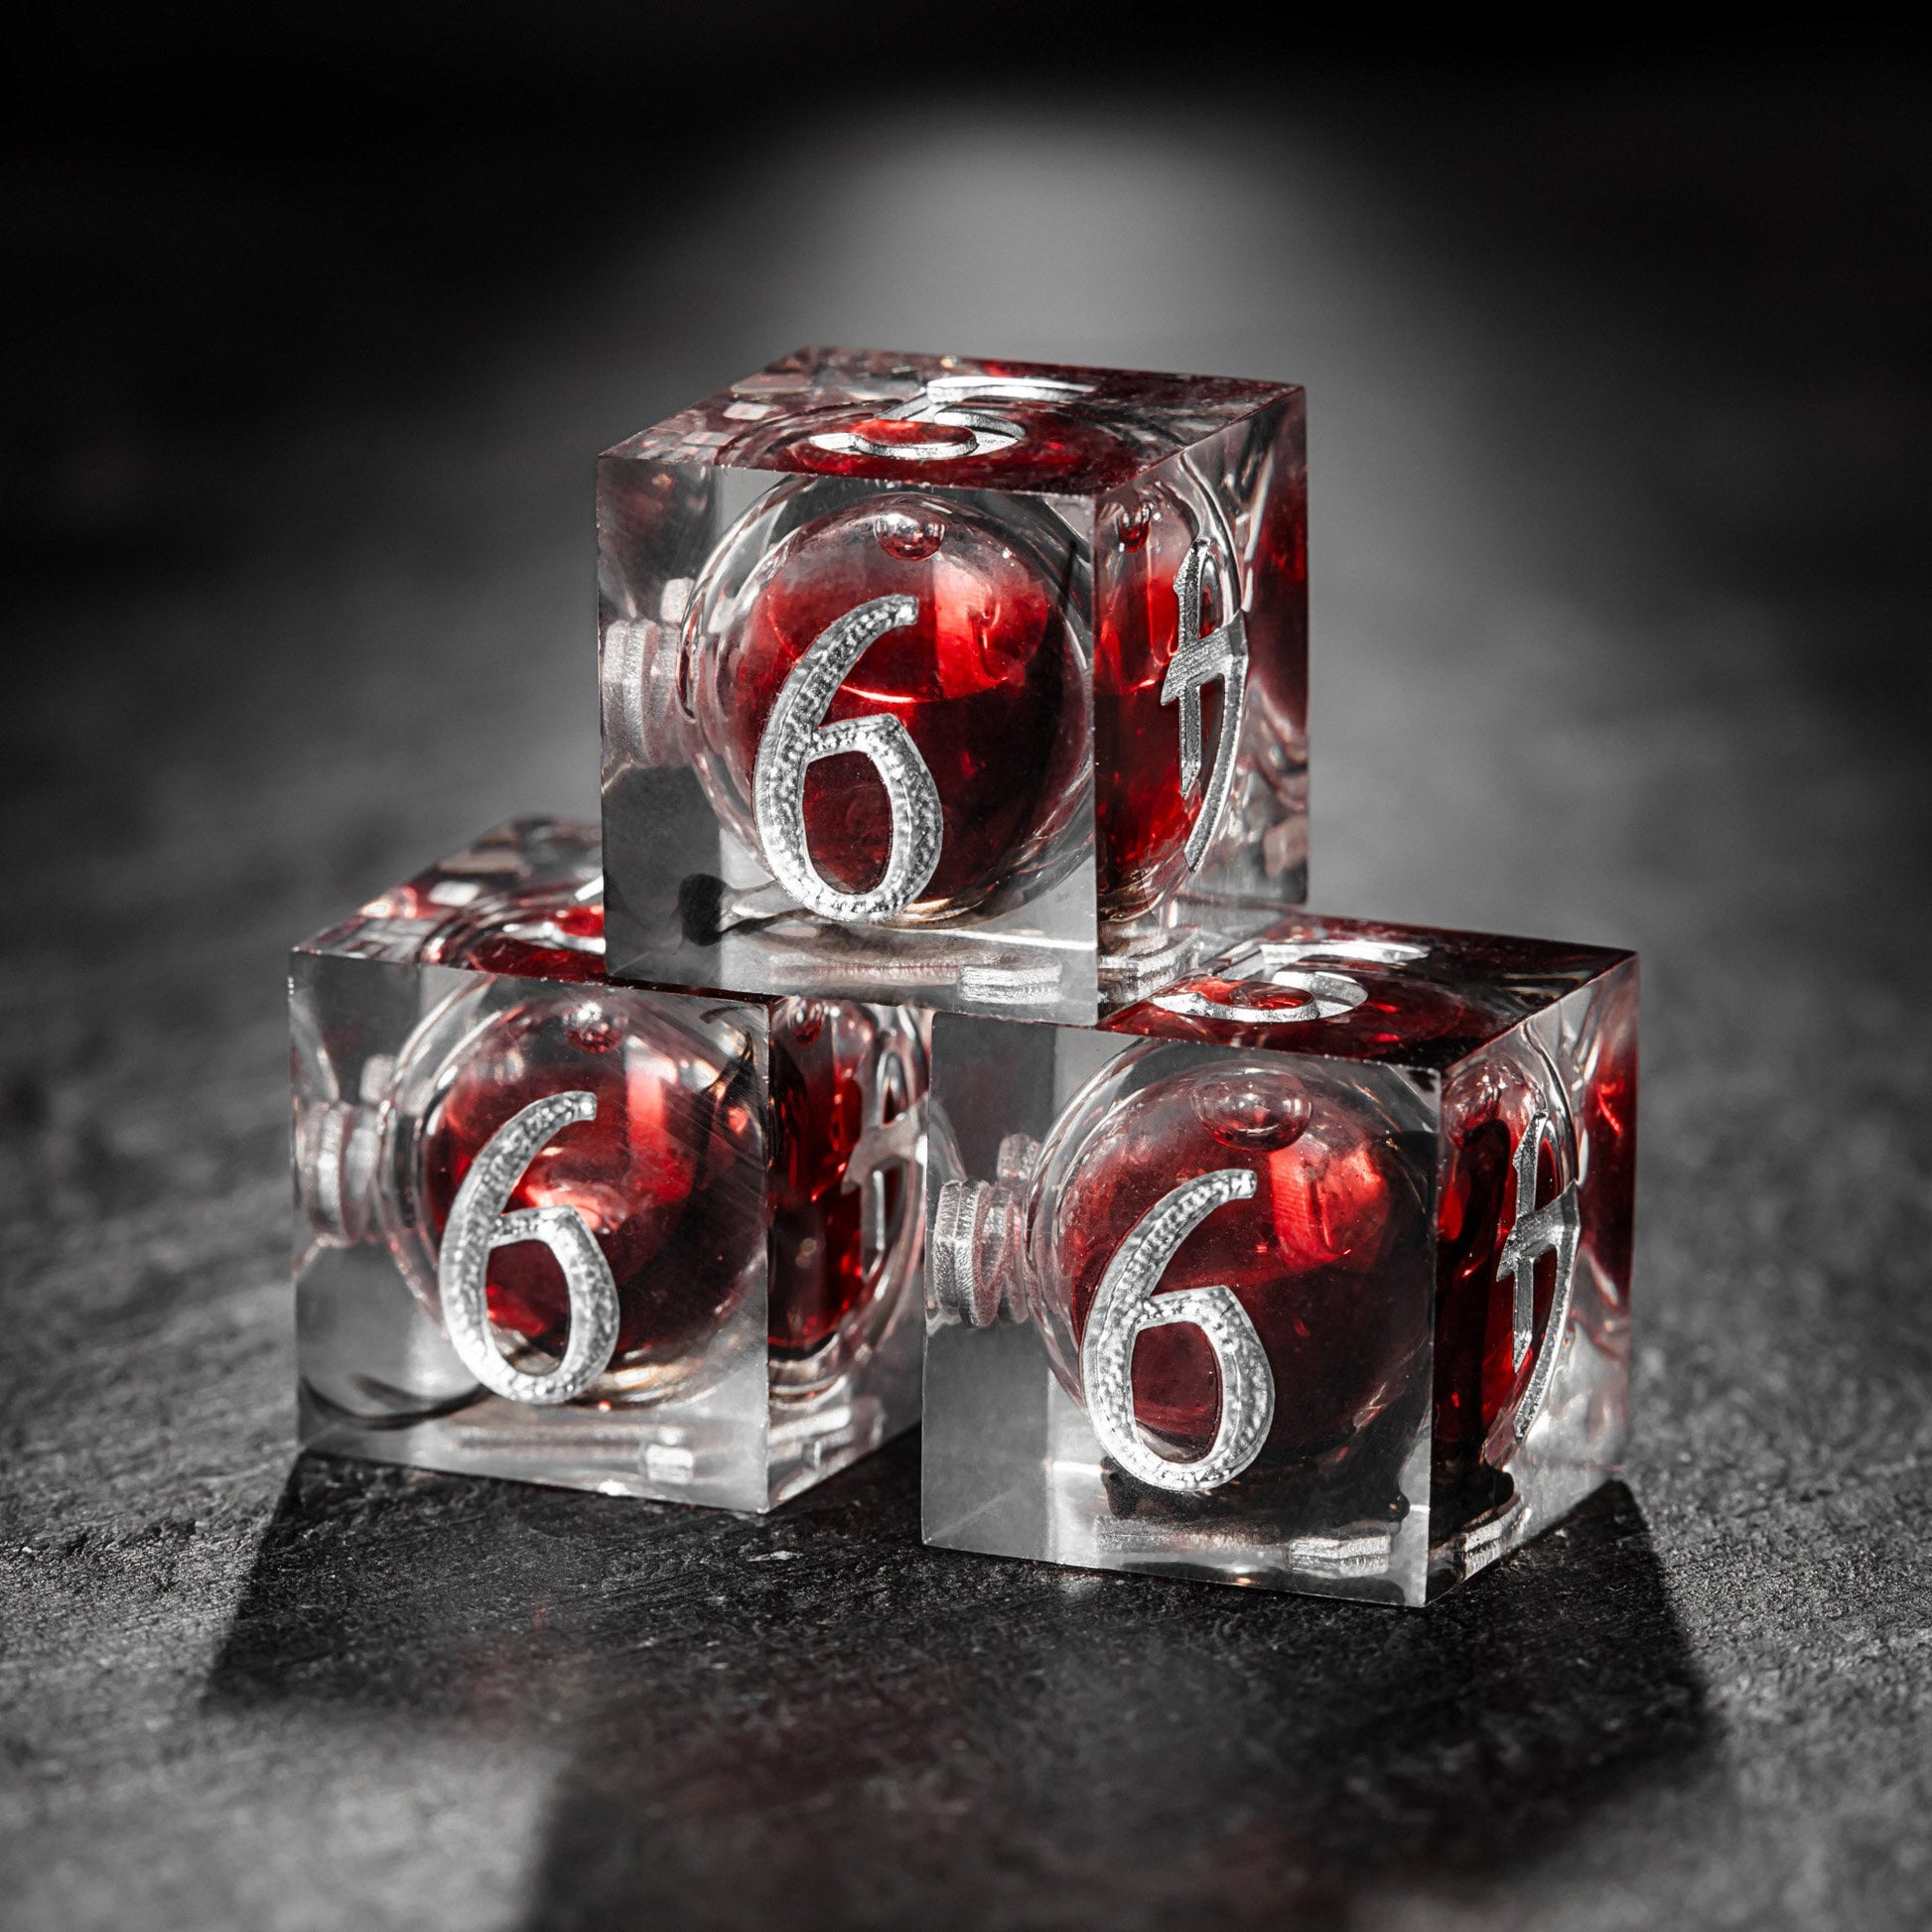 Blood Red Liquid Core Dice Bat DnD D&D Dice Set - CrystalMaggie